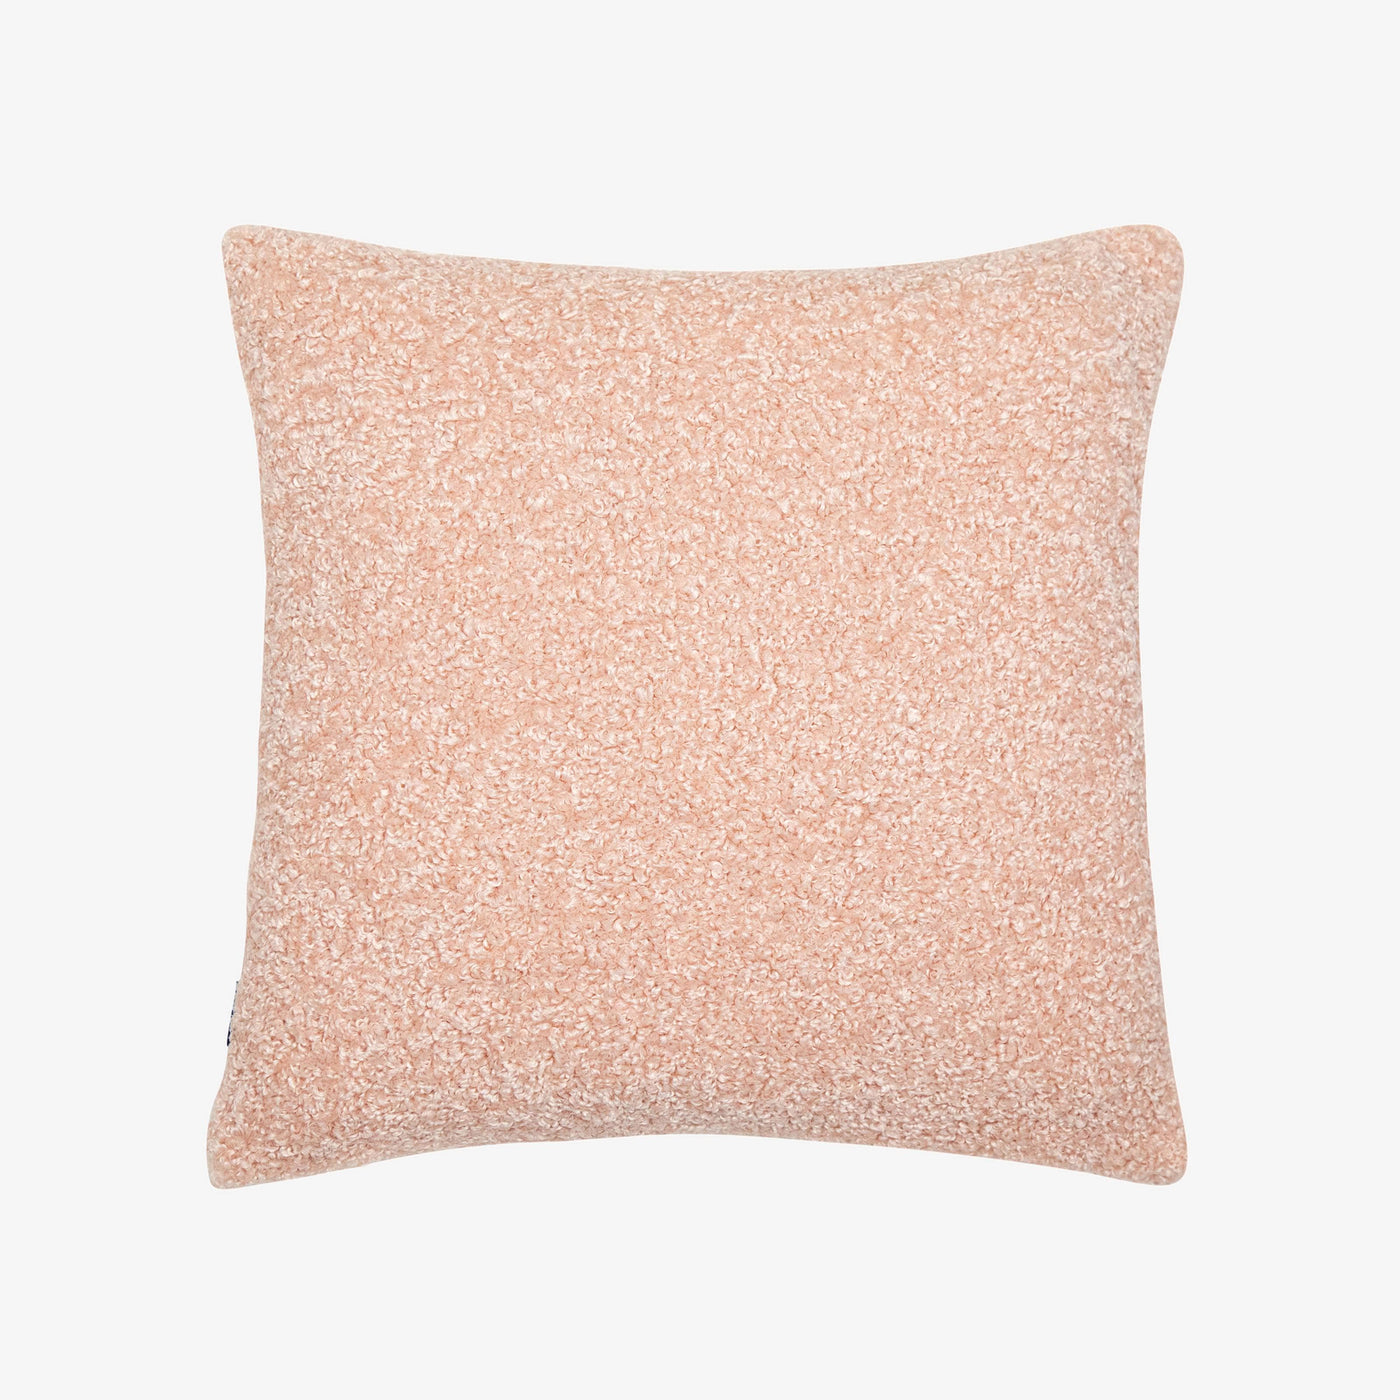 Ursulus Faux Fur Cushion, Blush Pink, 45x45 cm Cushions sazy.com